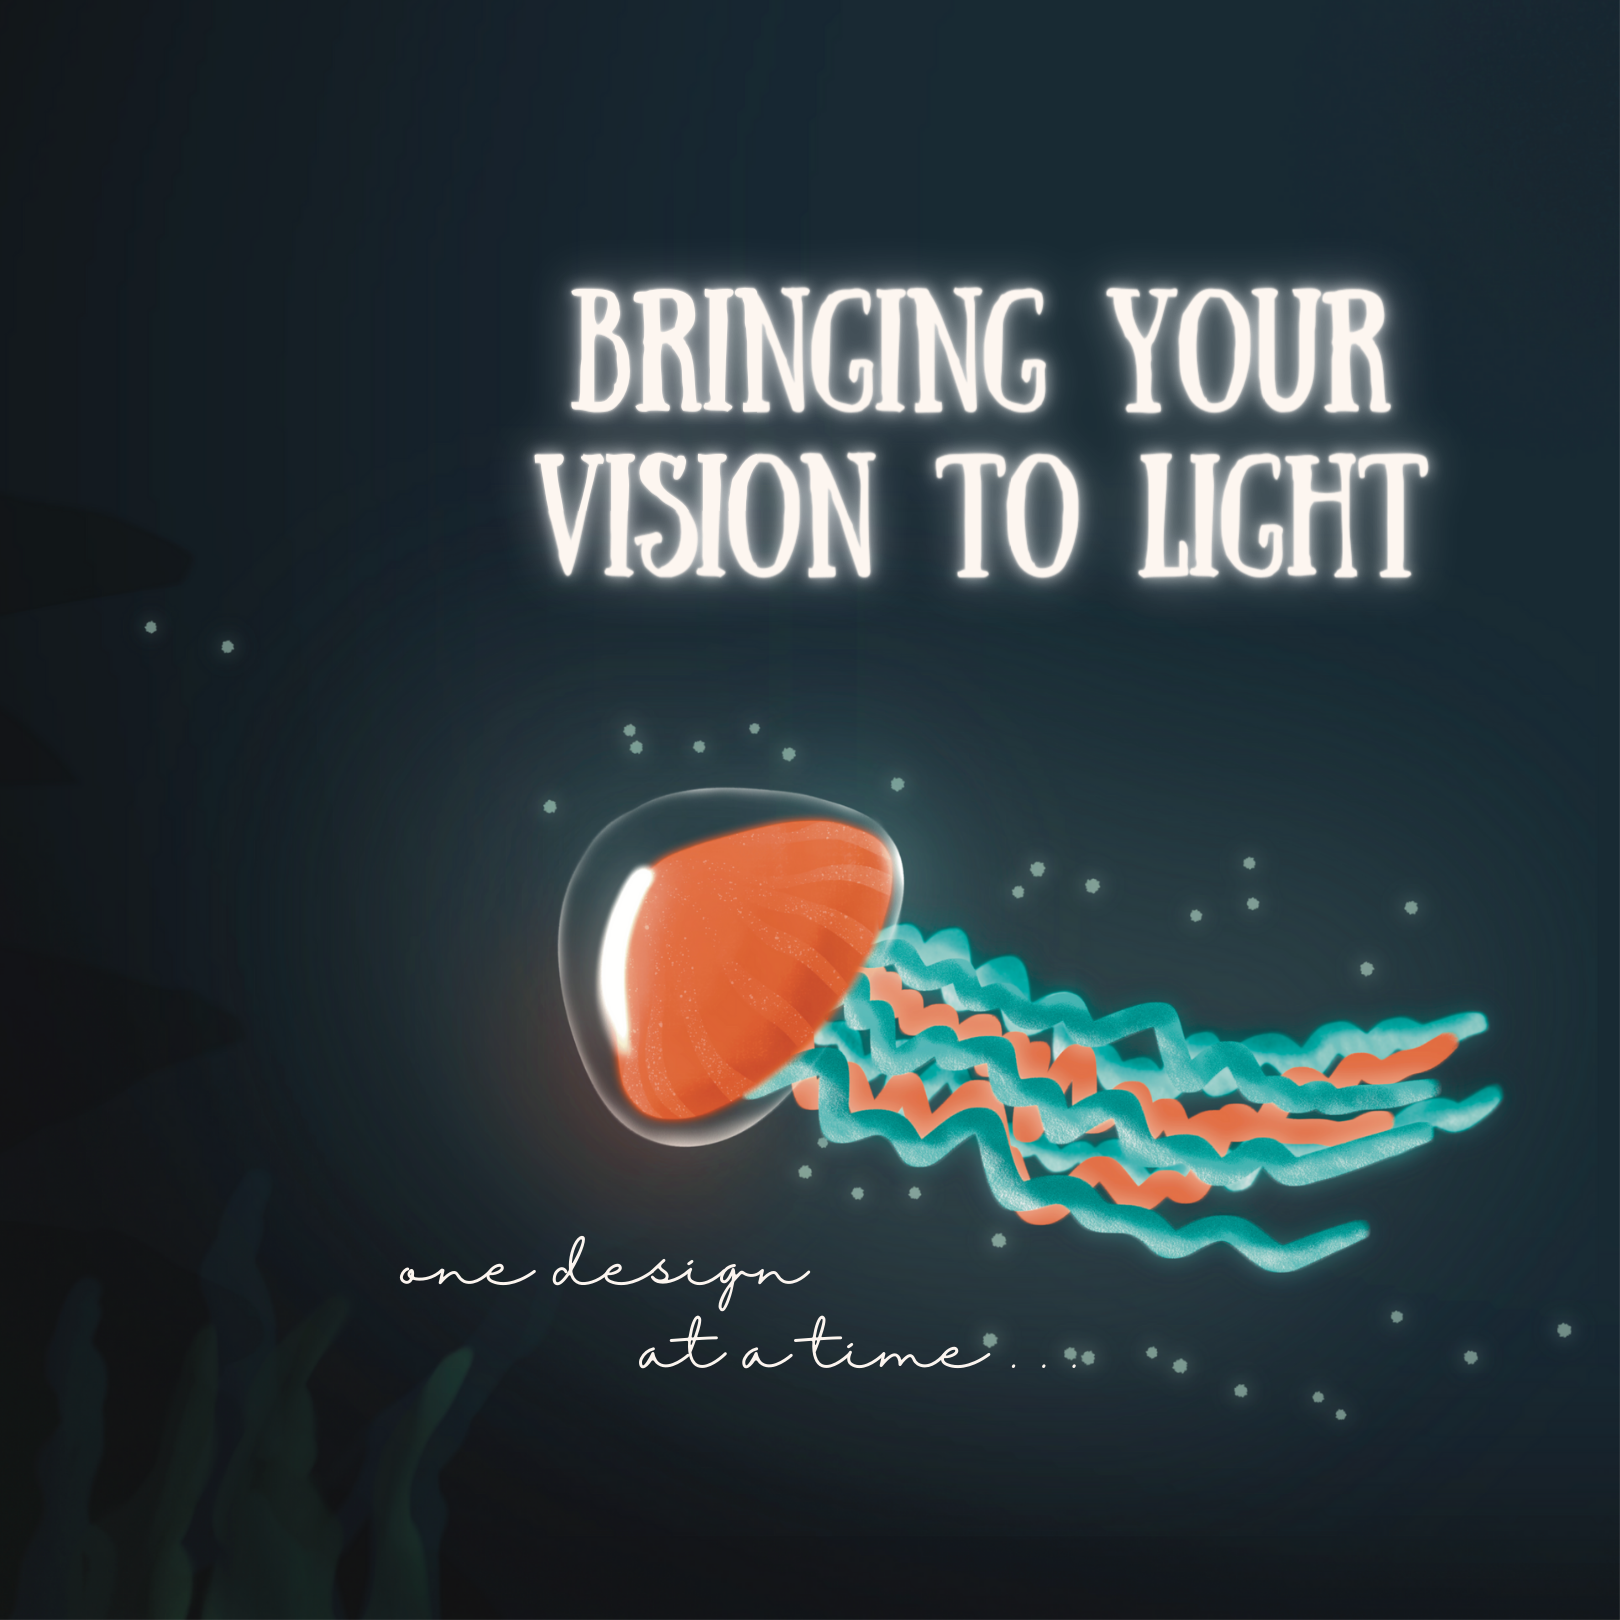 Maria von Hatten Digital Illustration of a Jellyfish "Bringing Your Vision to Light"